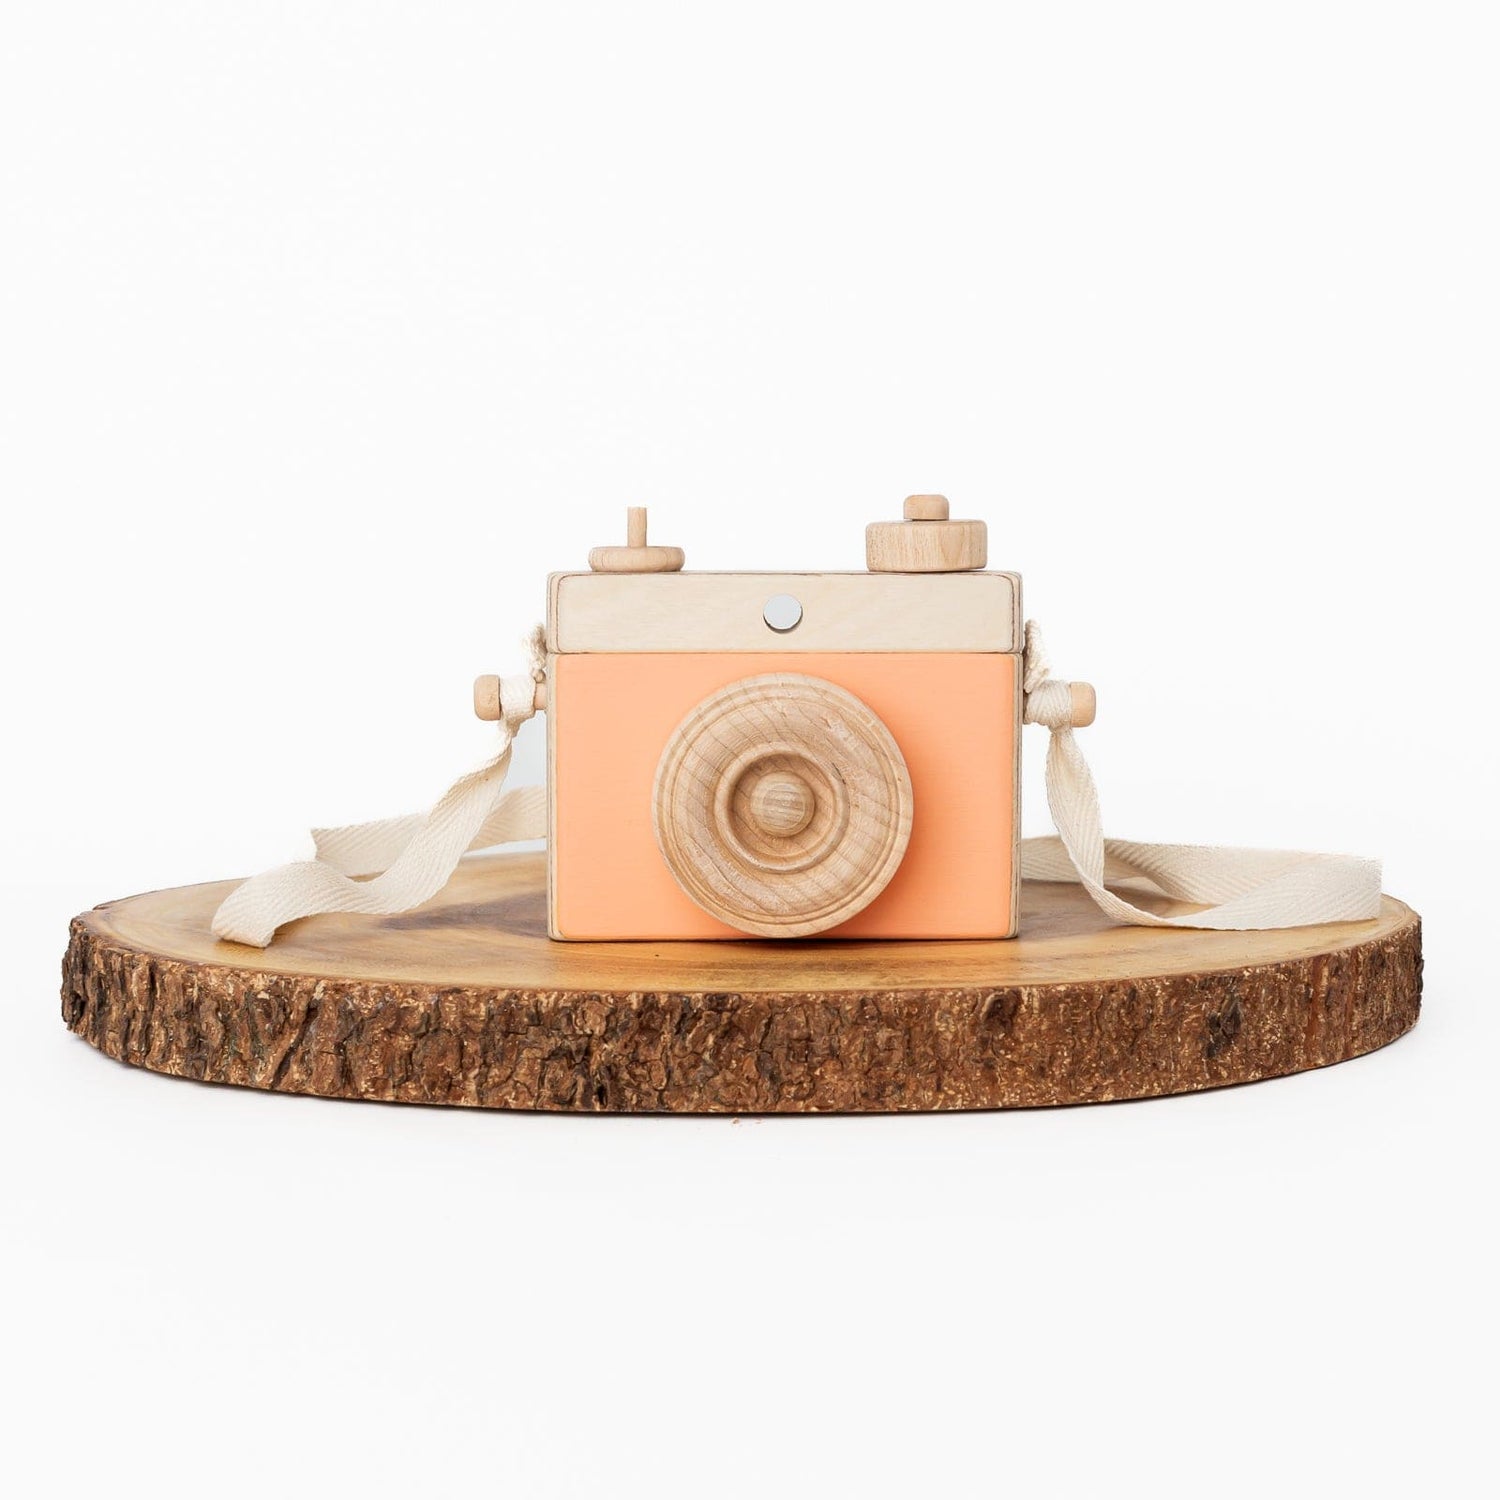 Little Rose & Co. Pretend Play Handmade Wooden Toy Camera (Peach)